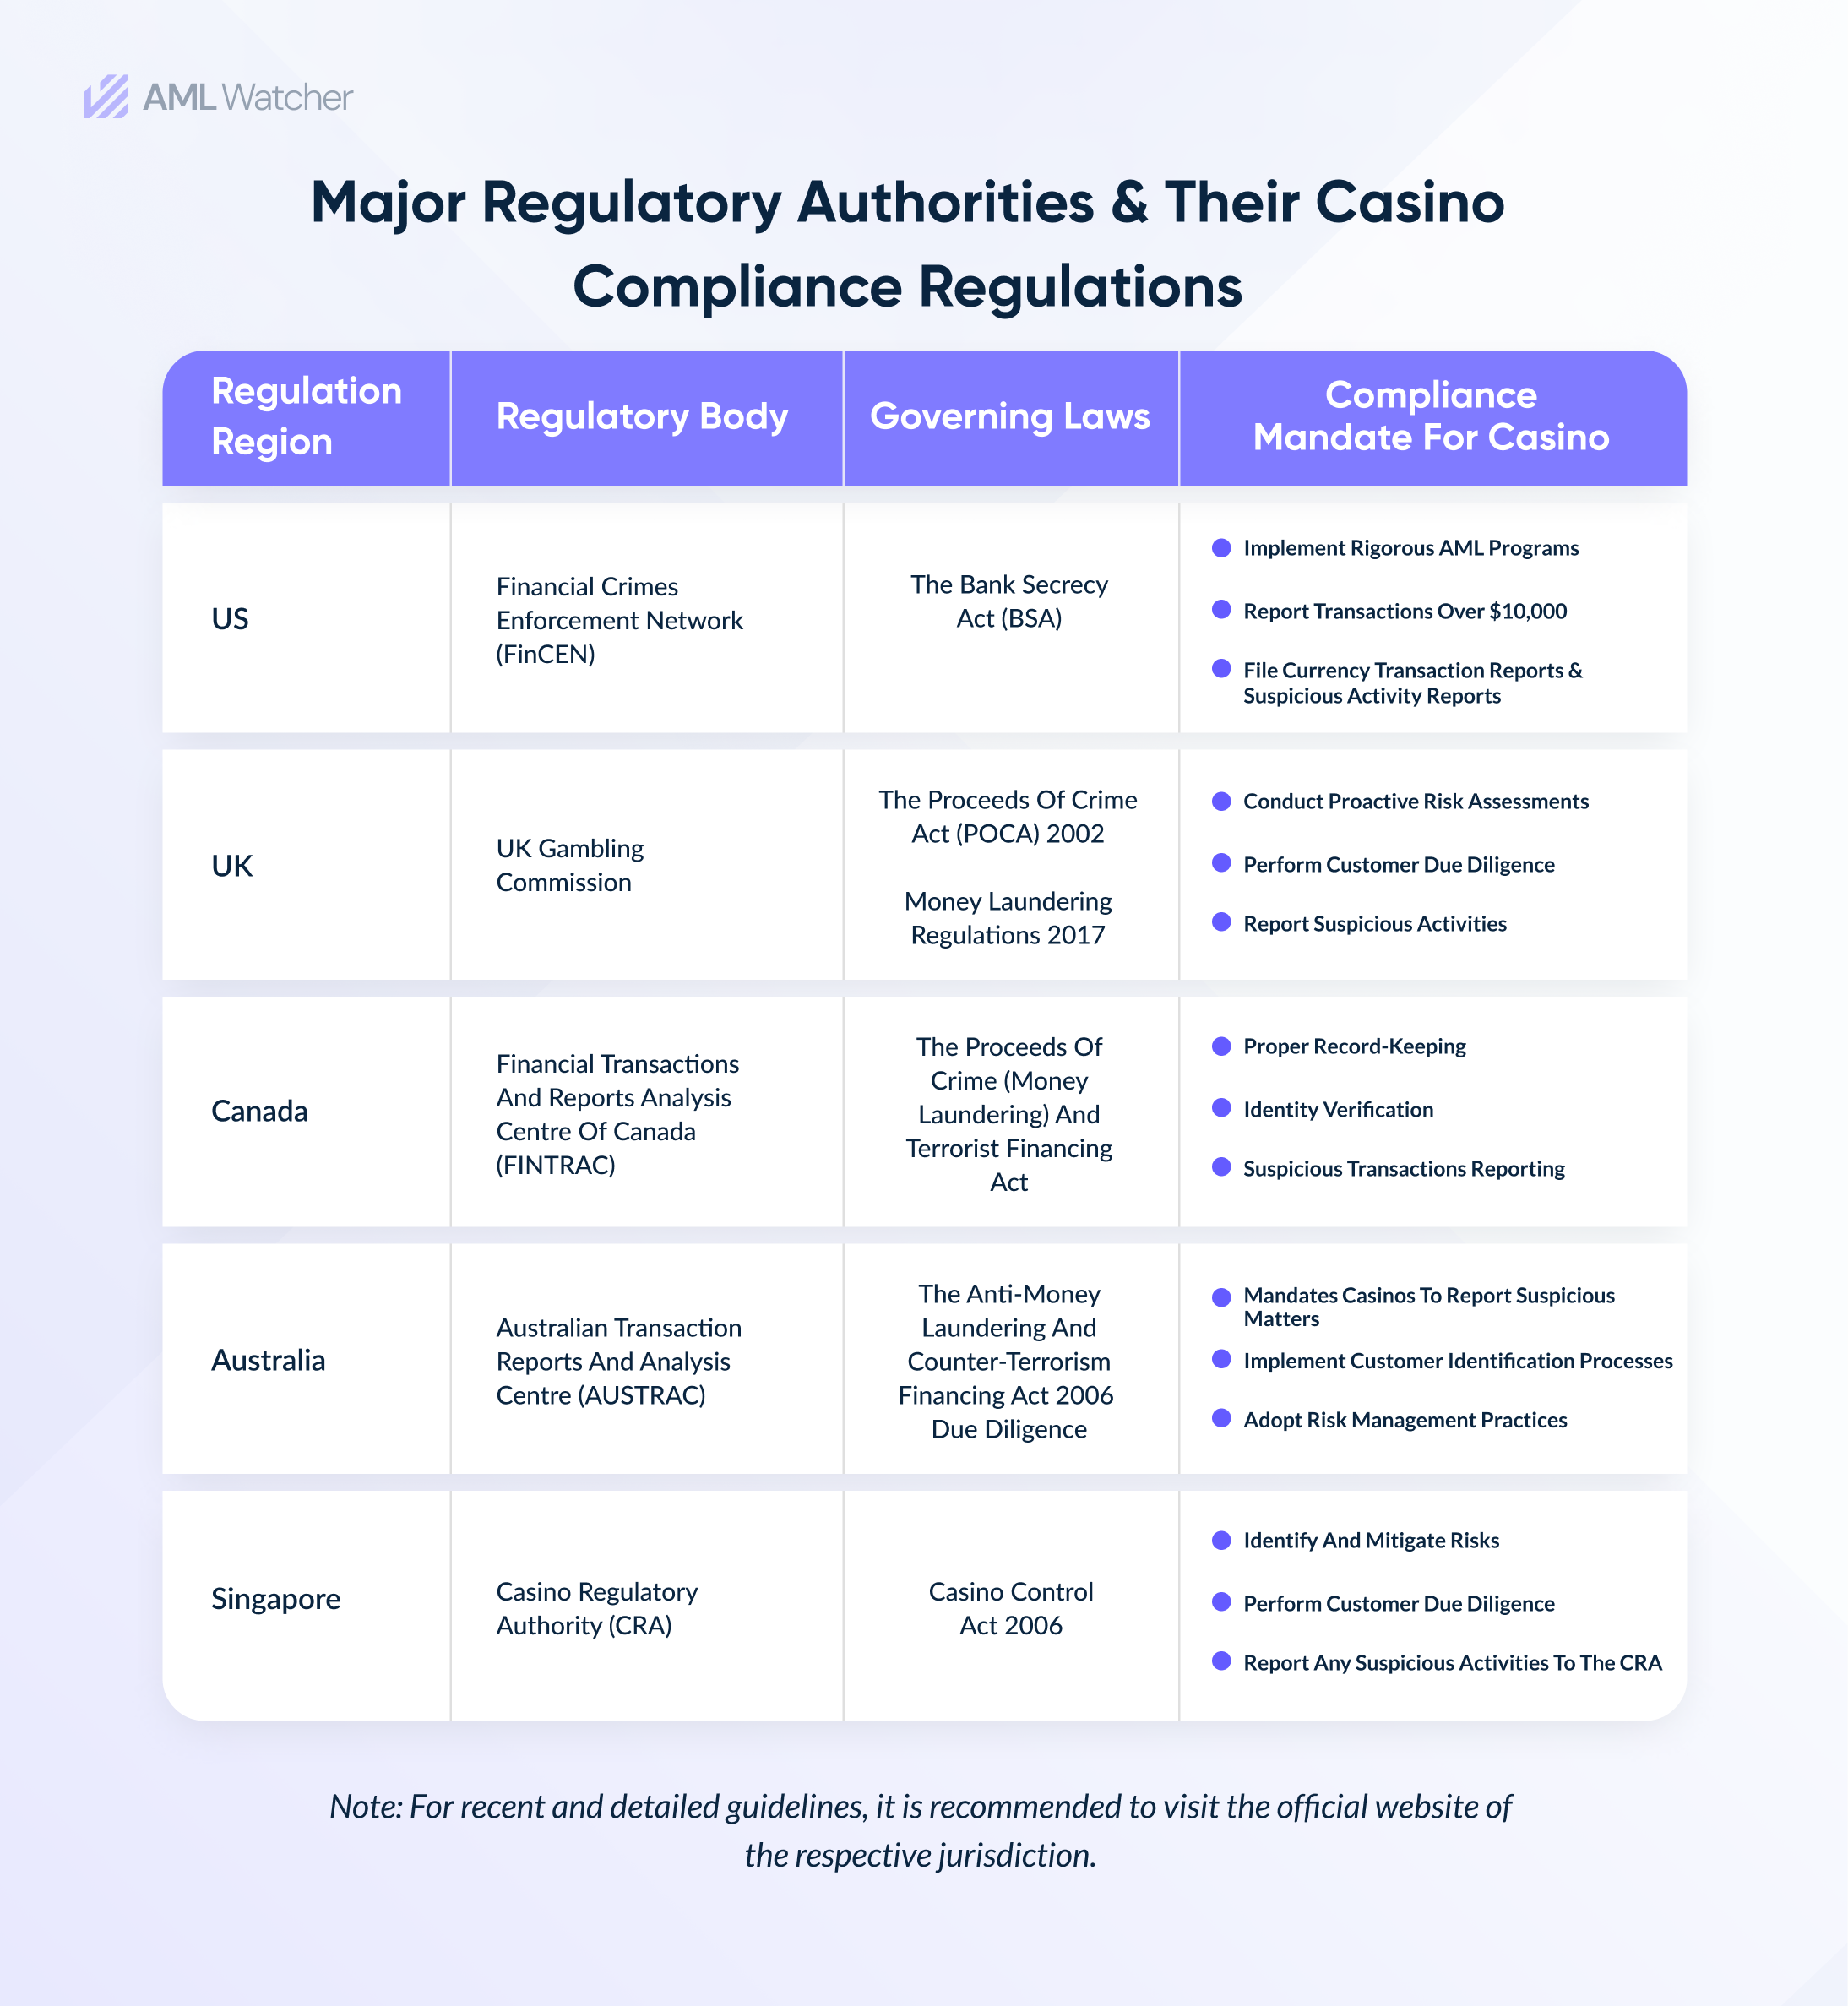 This image illustrates the major international regulatory authorities imposed AML regulations on casinos. 